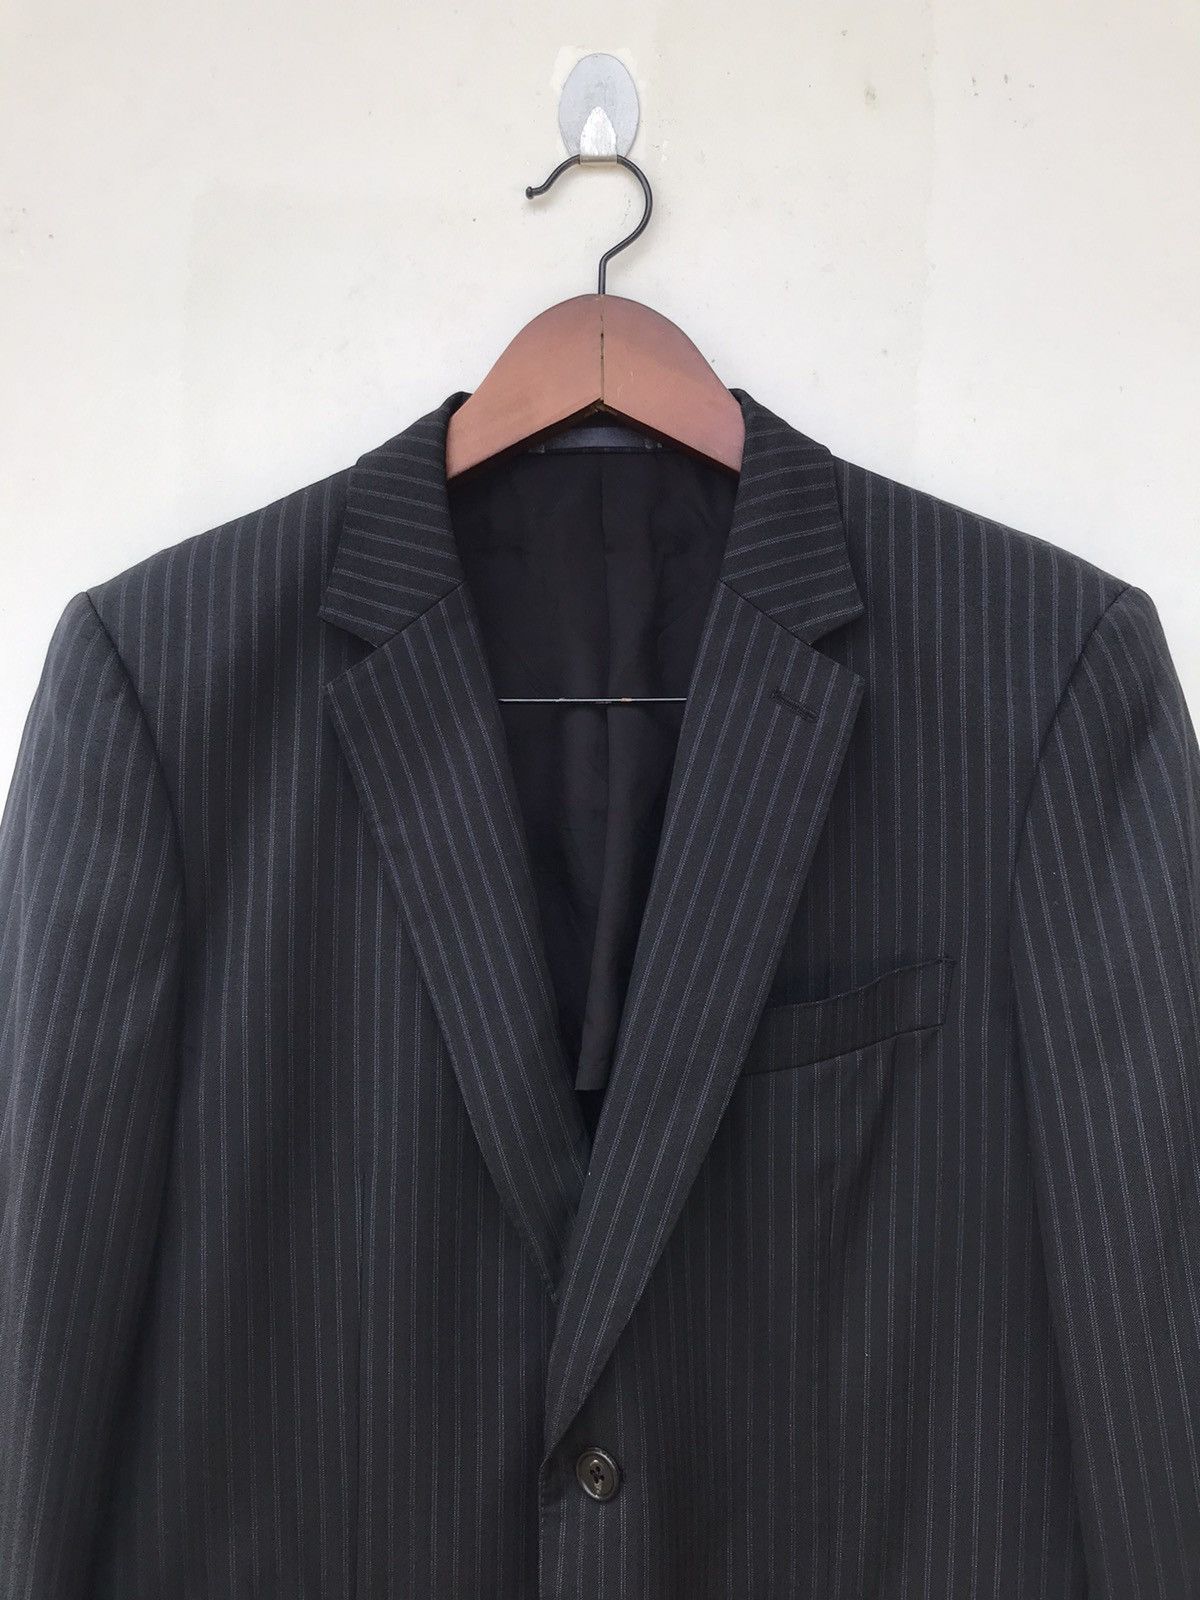 Loro Piana x Paul Smith Suit Jacket - 6